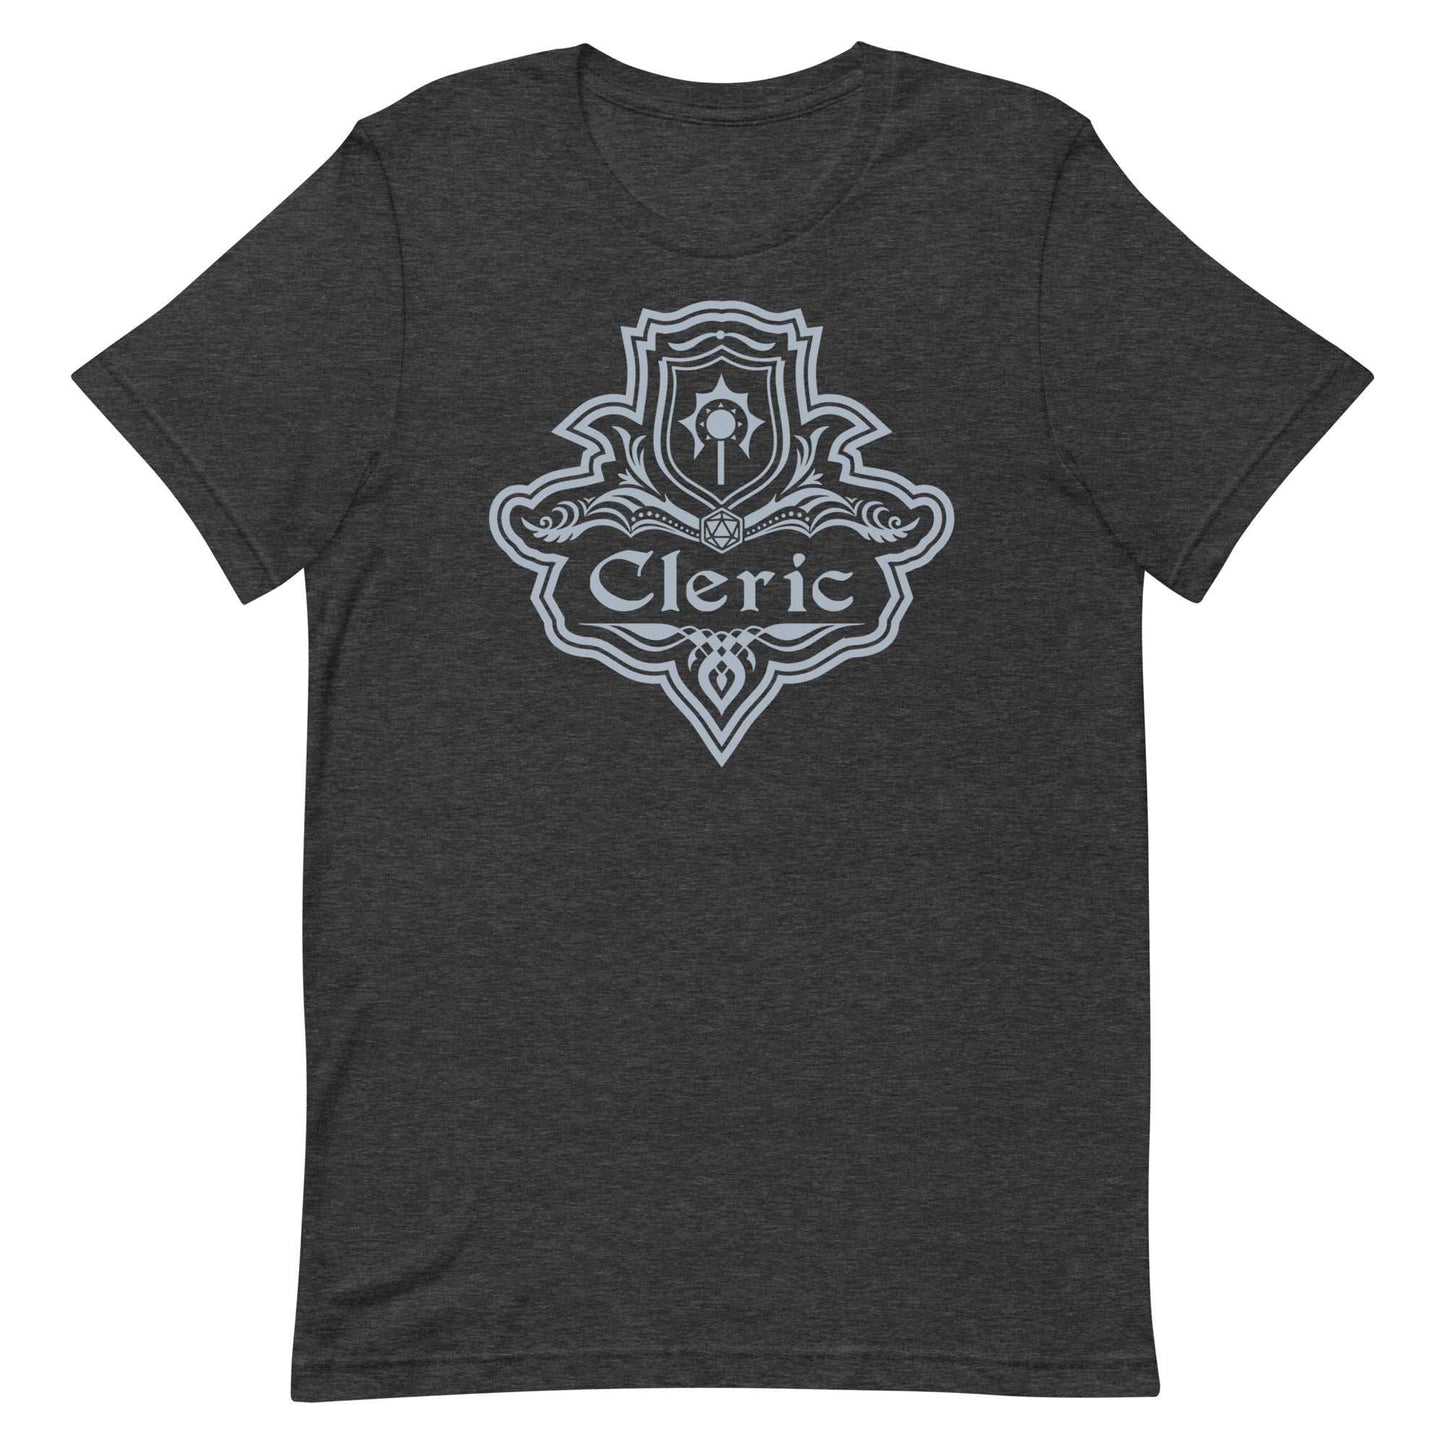 DnD Cleric Class Emblem T-Shirt - Dungeons & Dragons Cleric Tee T-Shirt Dark Grey Heather / S